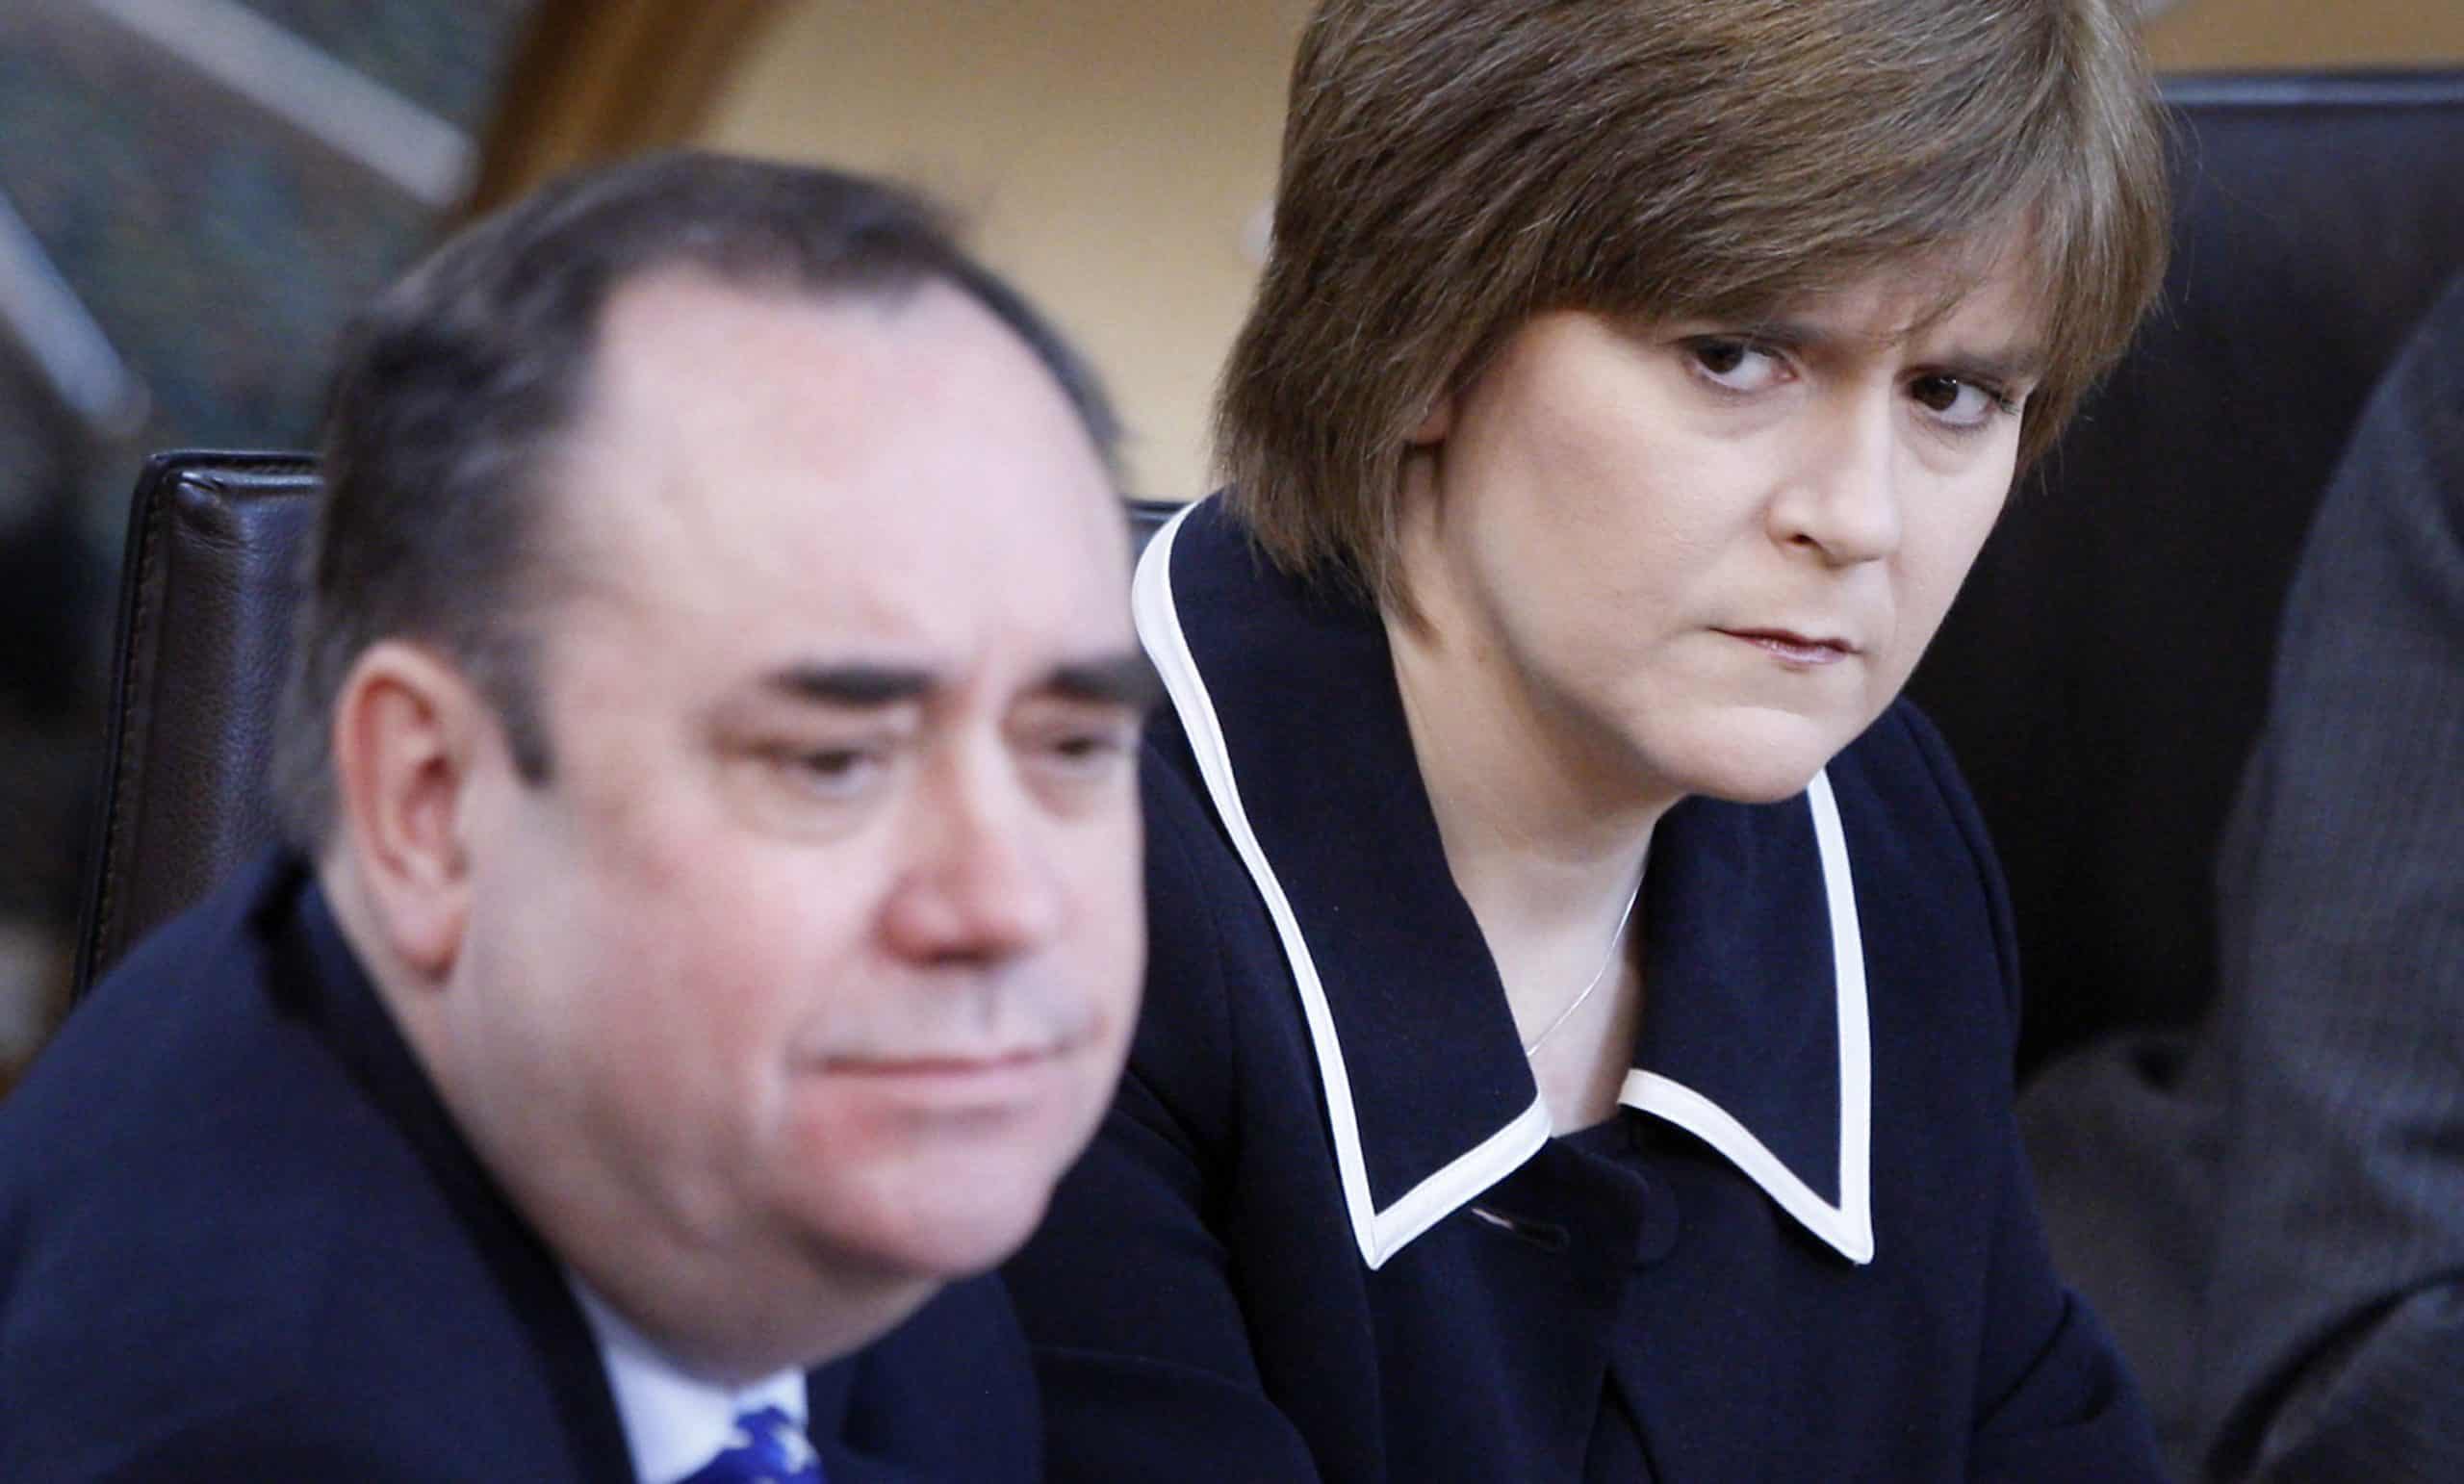 Sturgeon suffering from handling of Salmond affair, polls suggest